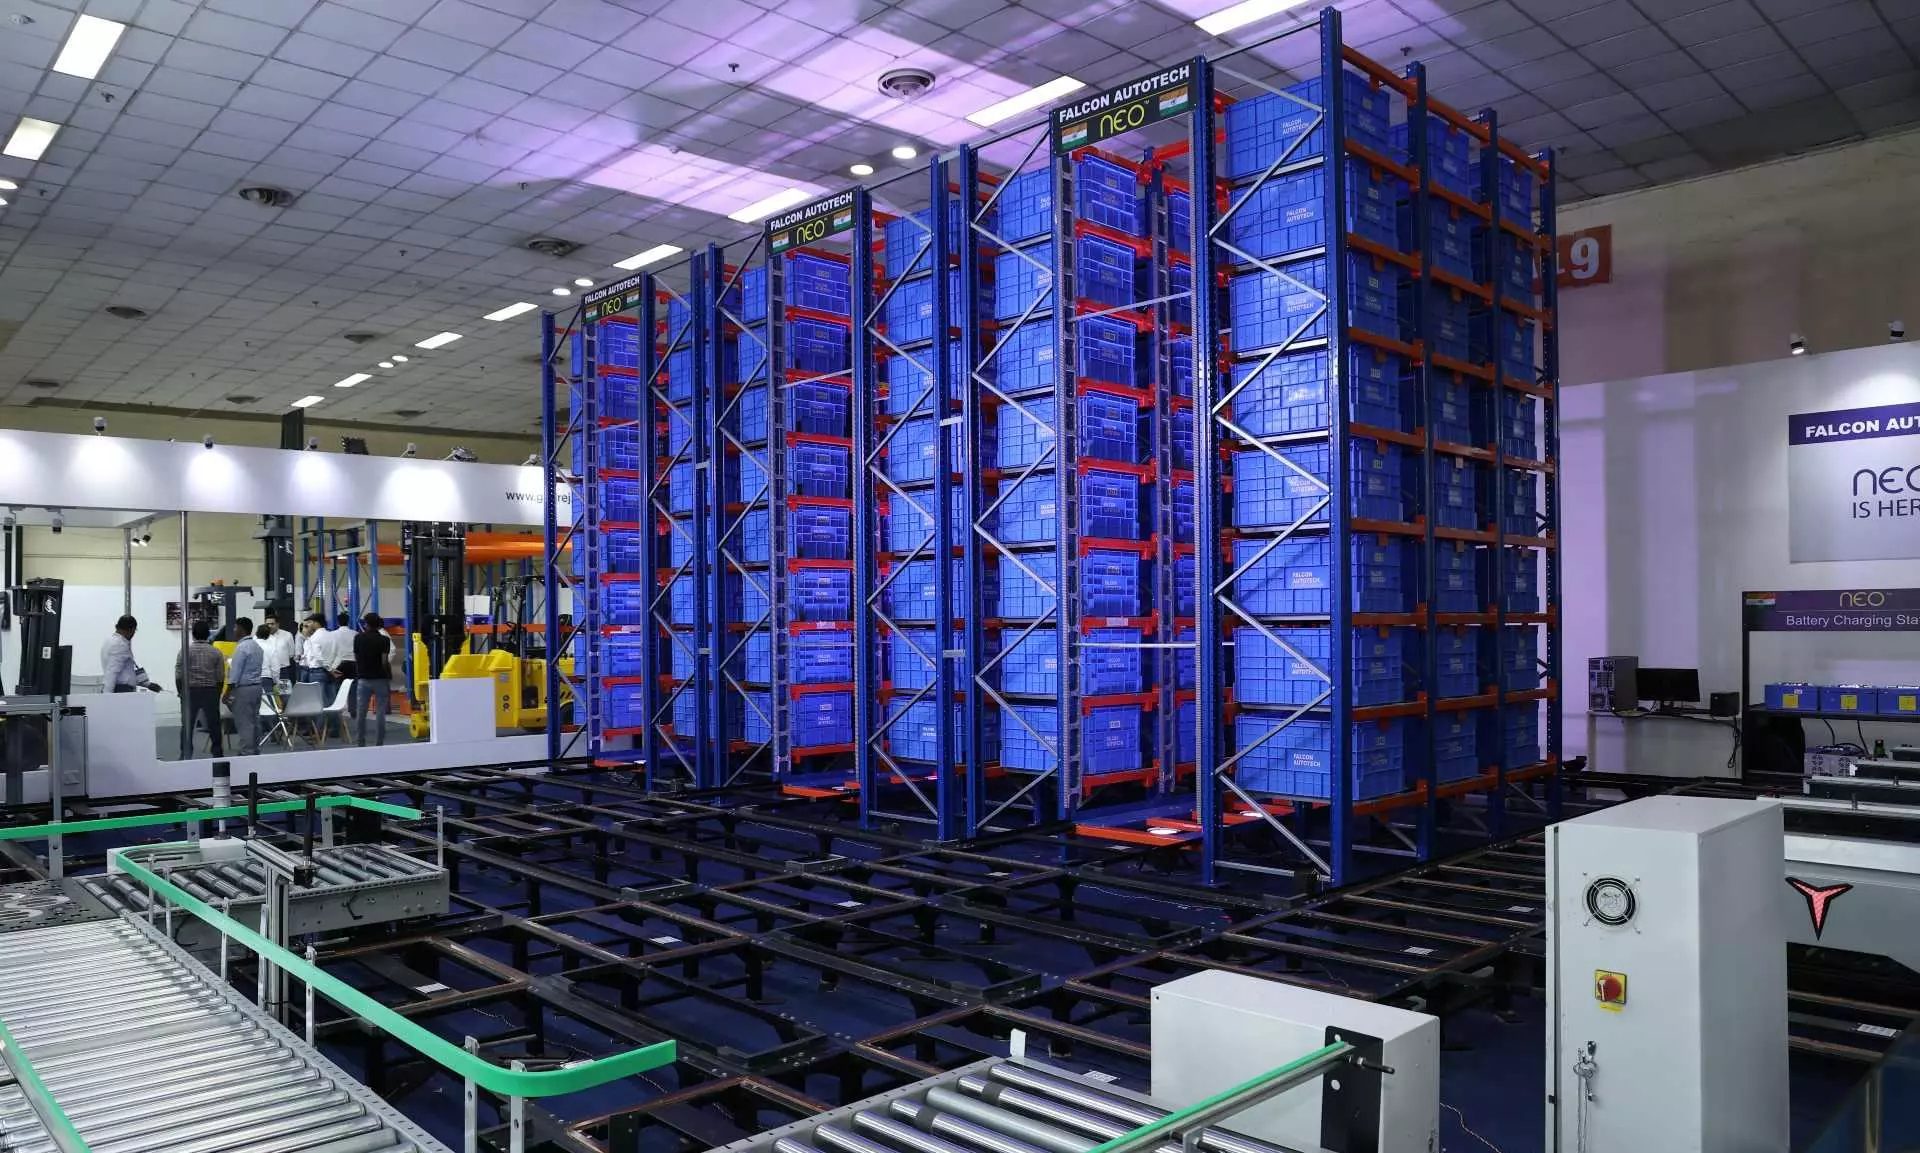 Automation revolutionizing intra-logistics, warehouse operations